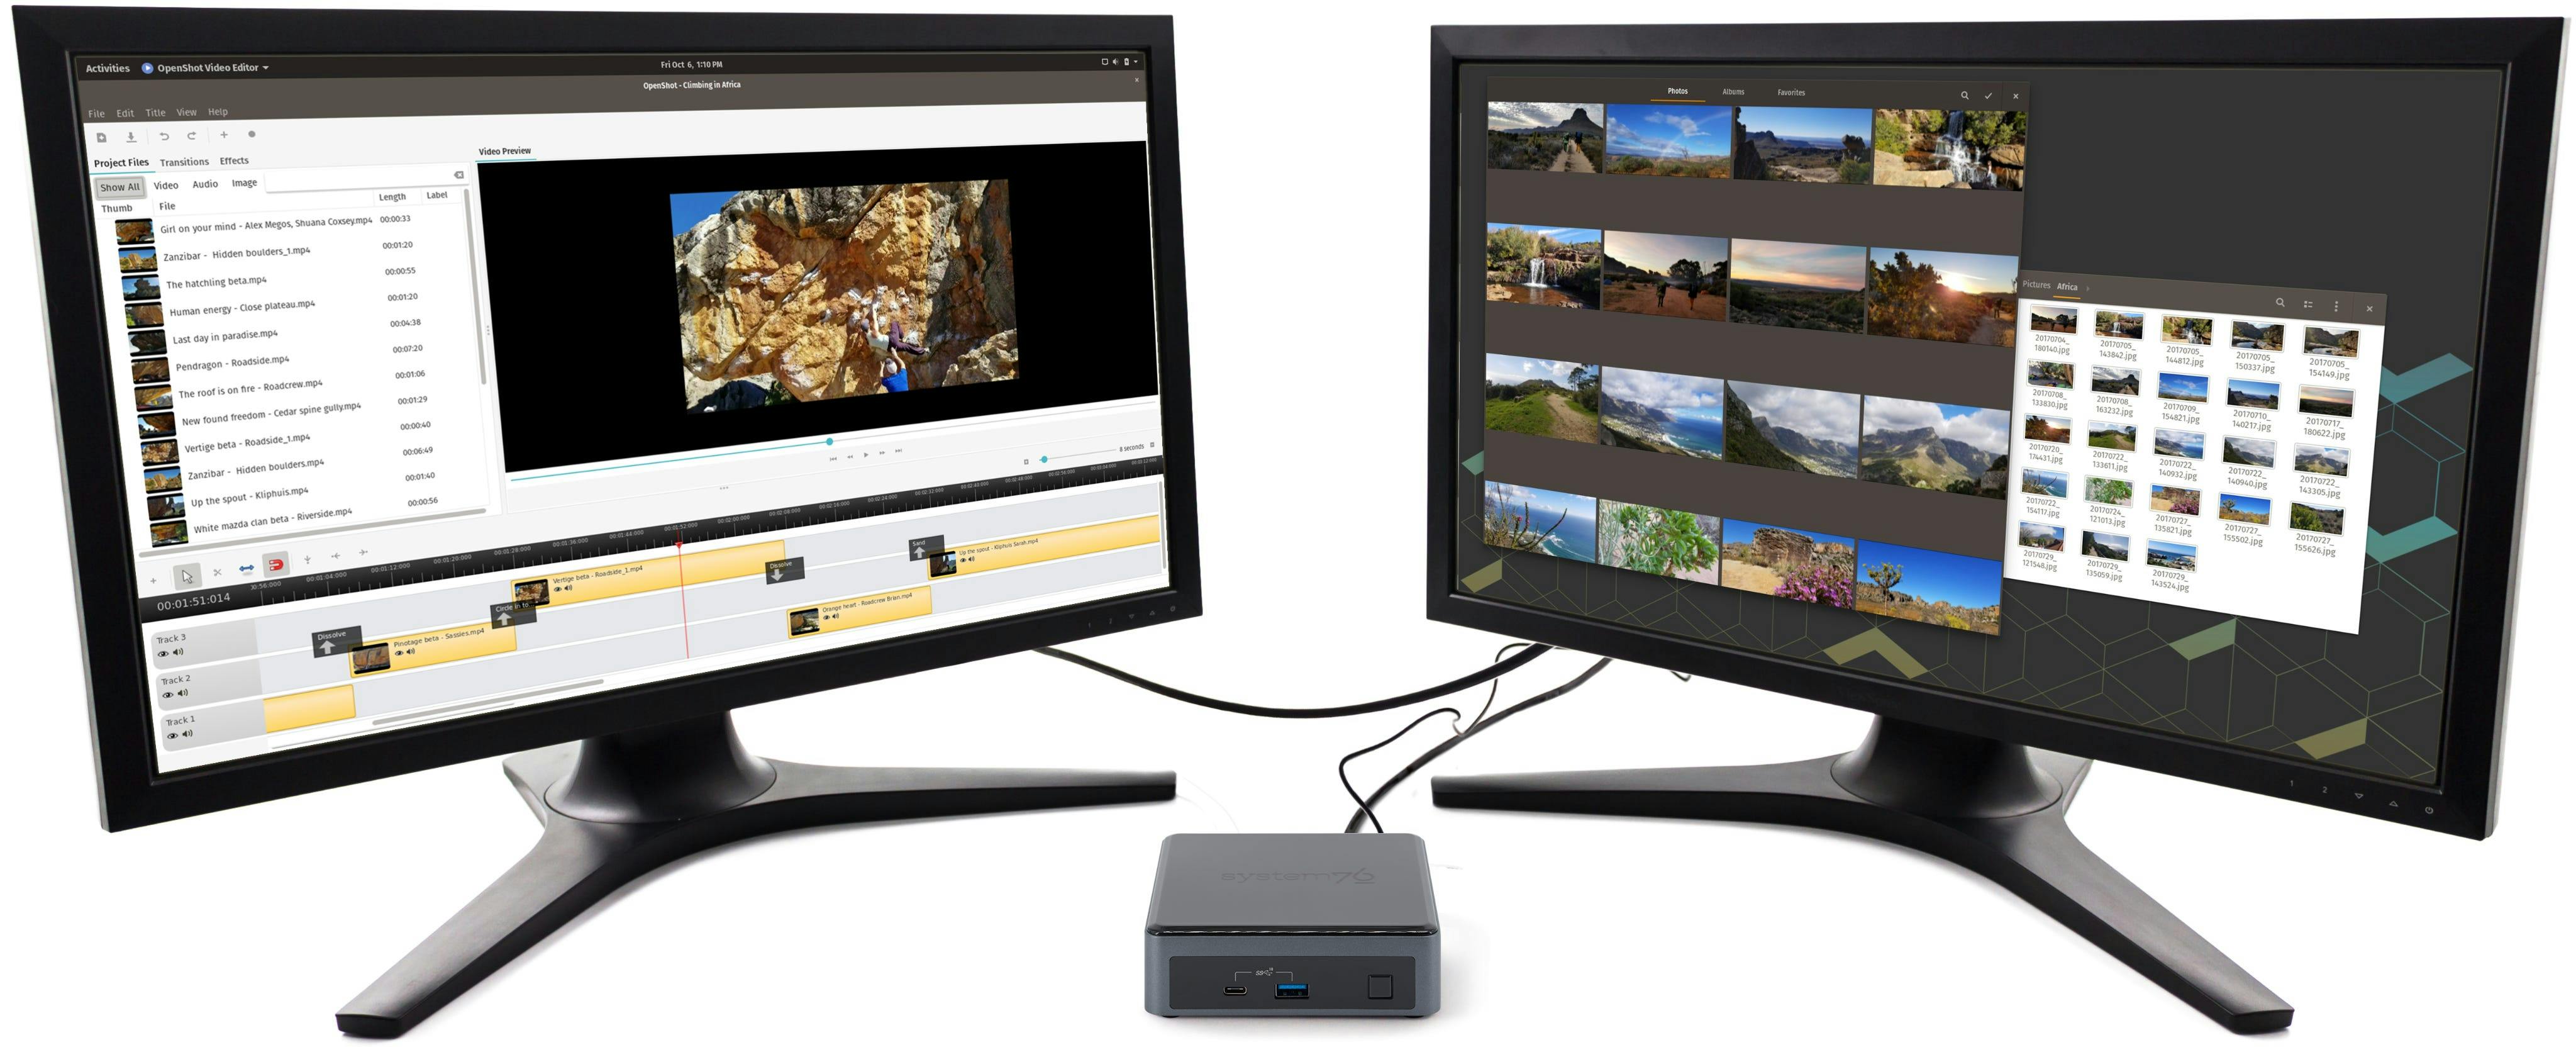 The Meerkat mini desktop shown editing a skiing video across two displays.